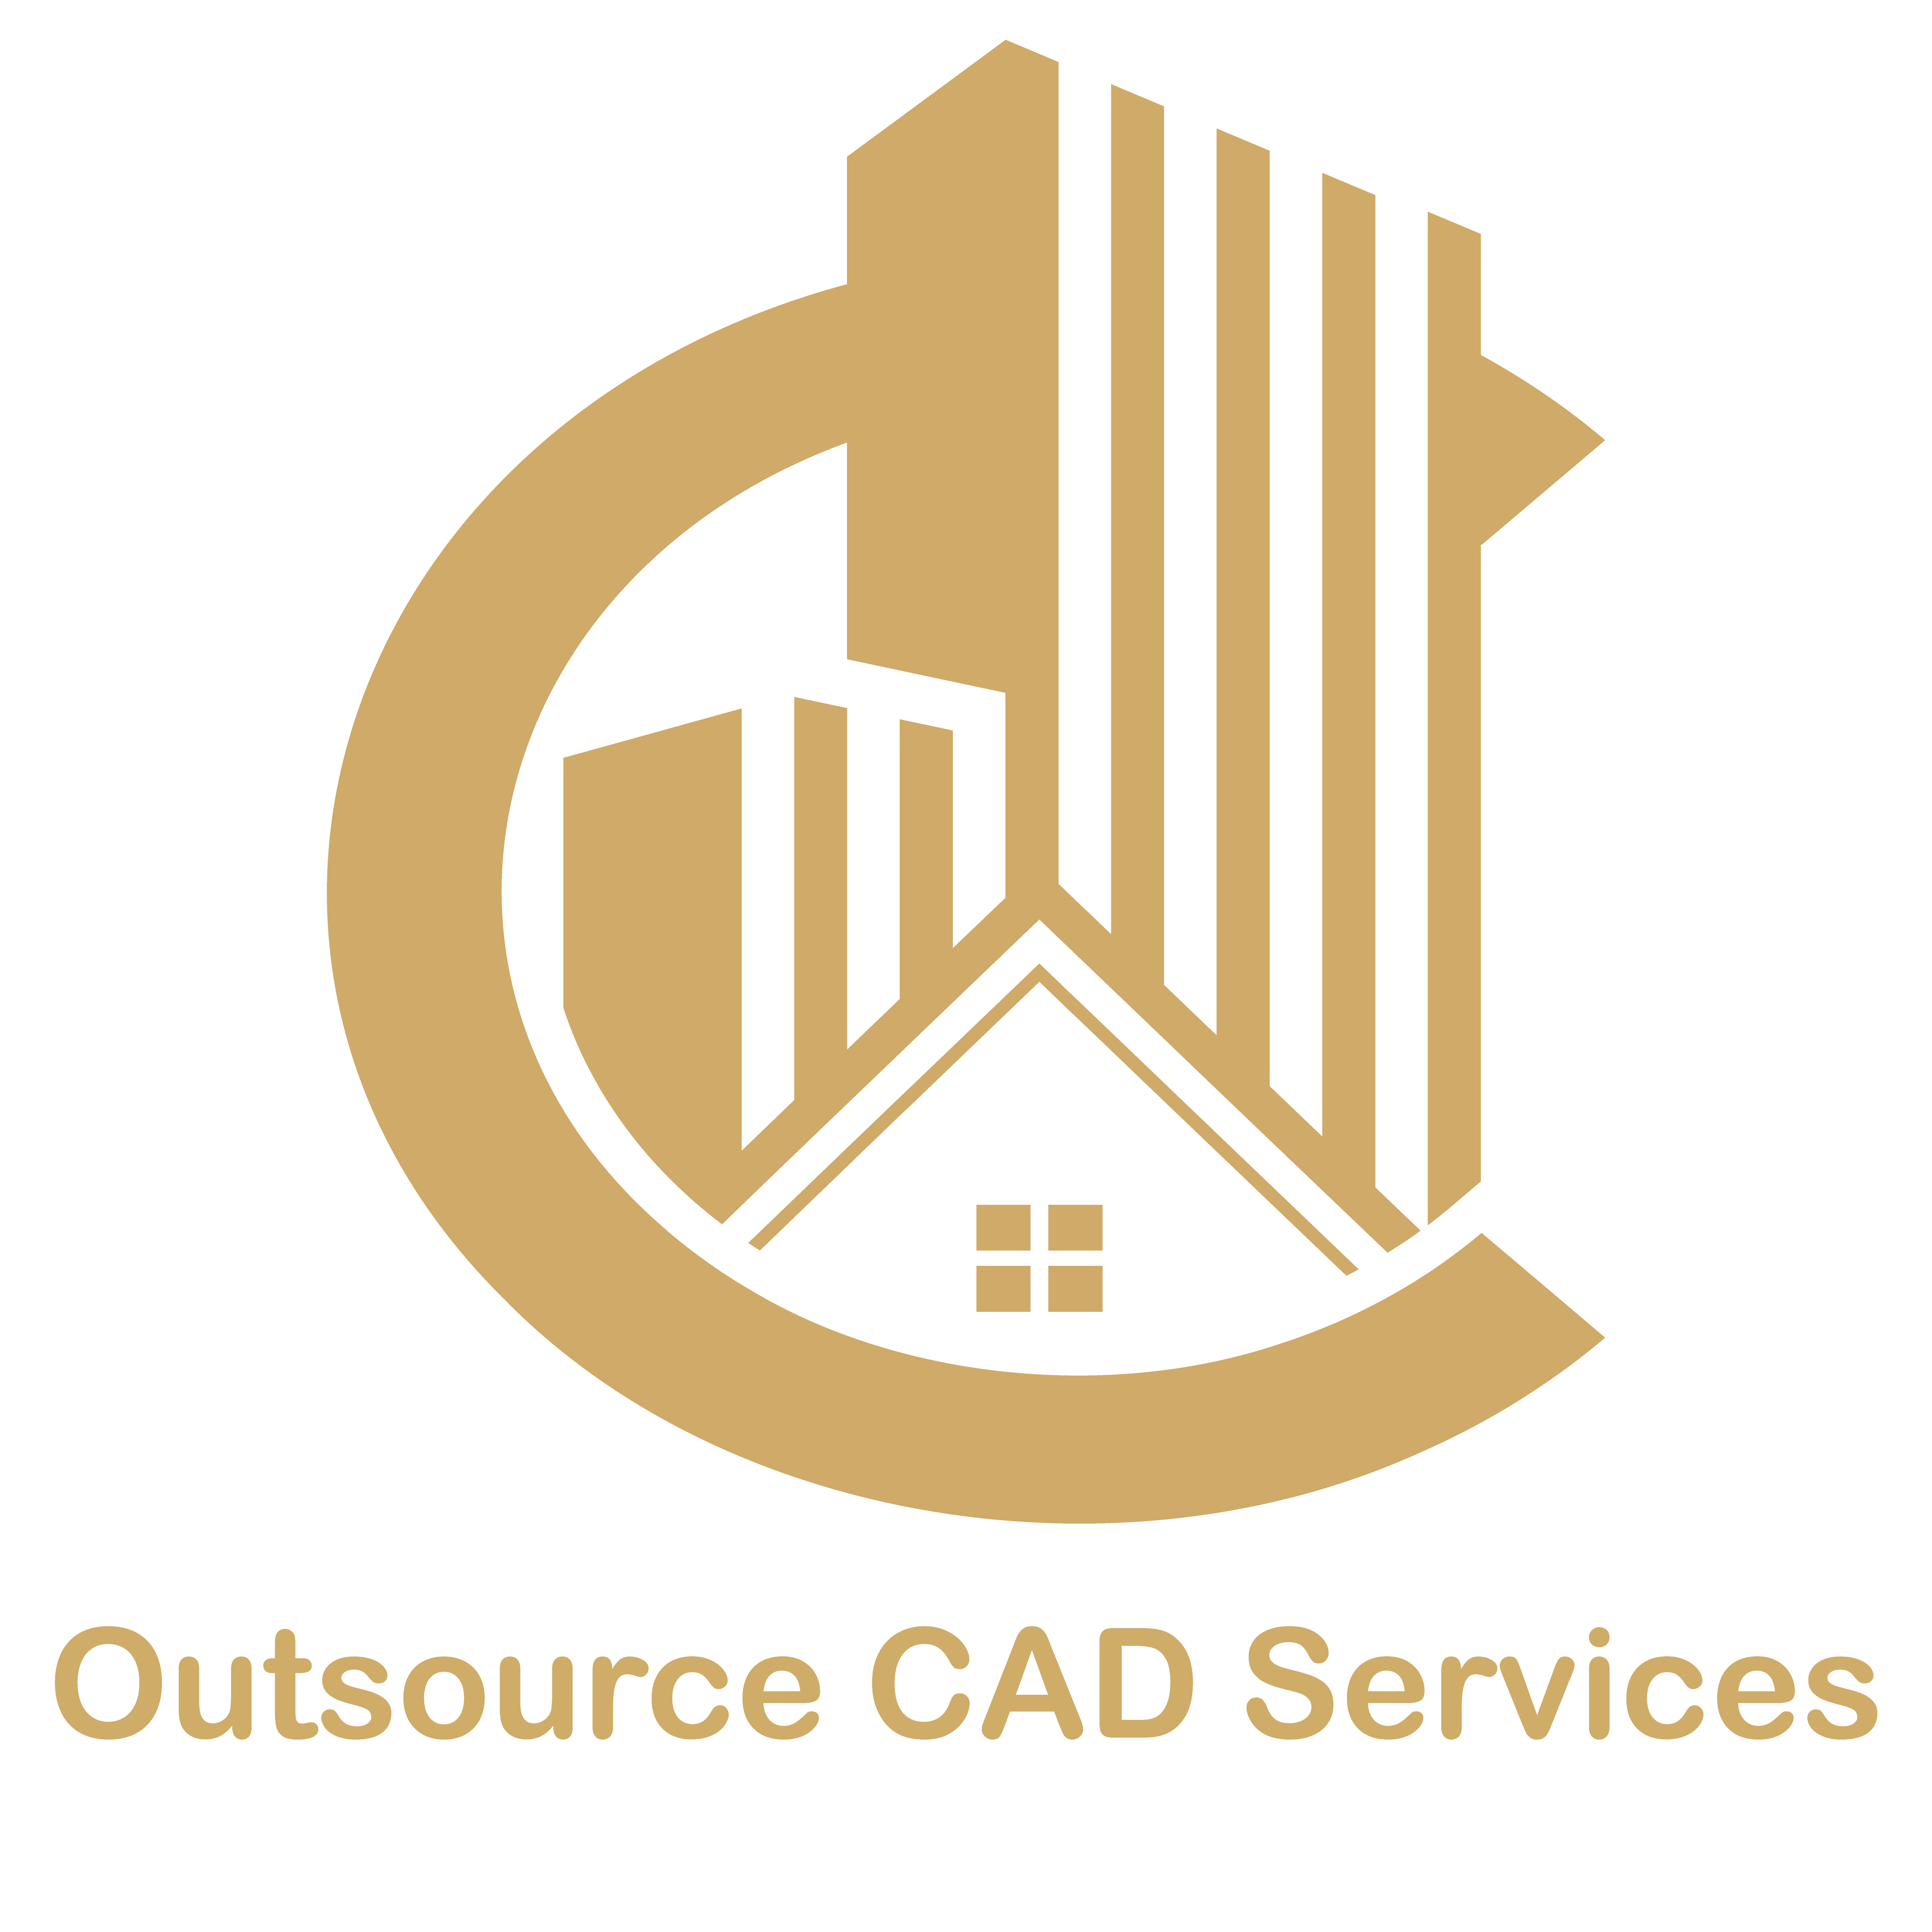 Outsource CAD Services LOGO